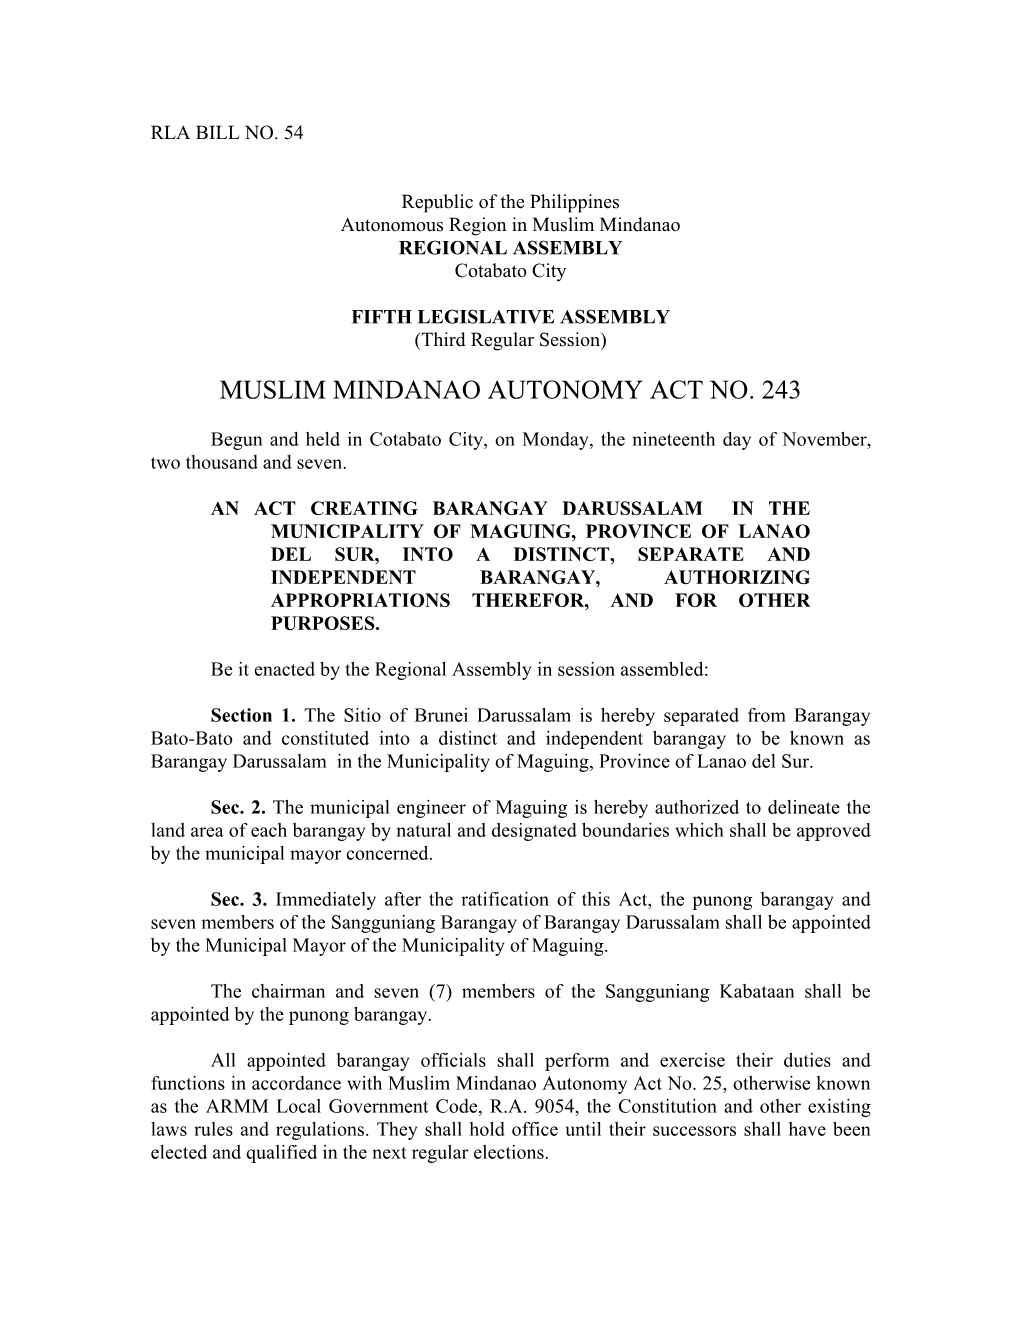 Muslim Mindanao Autonomy Act No. 243